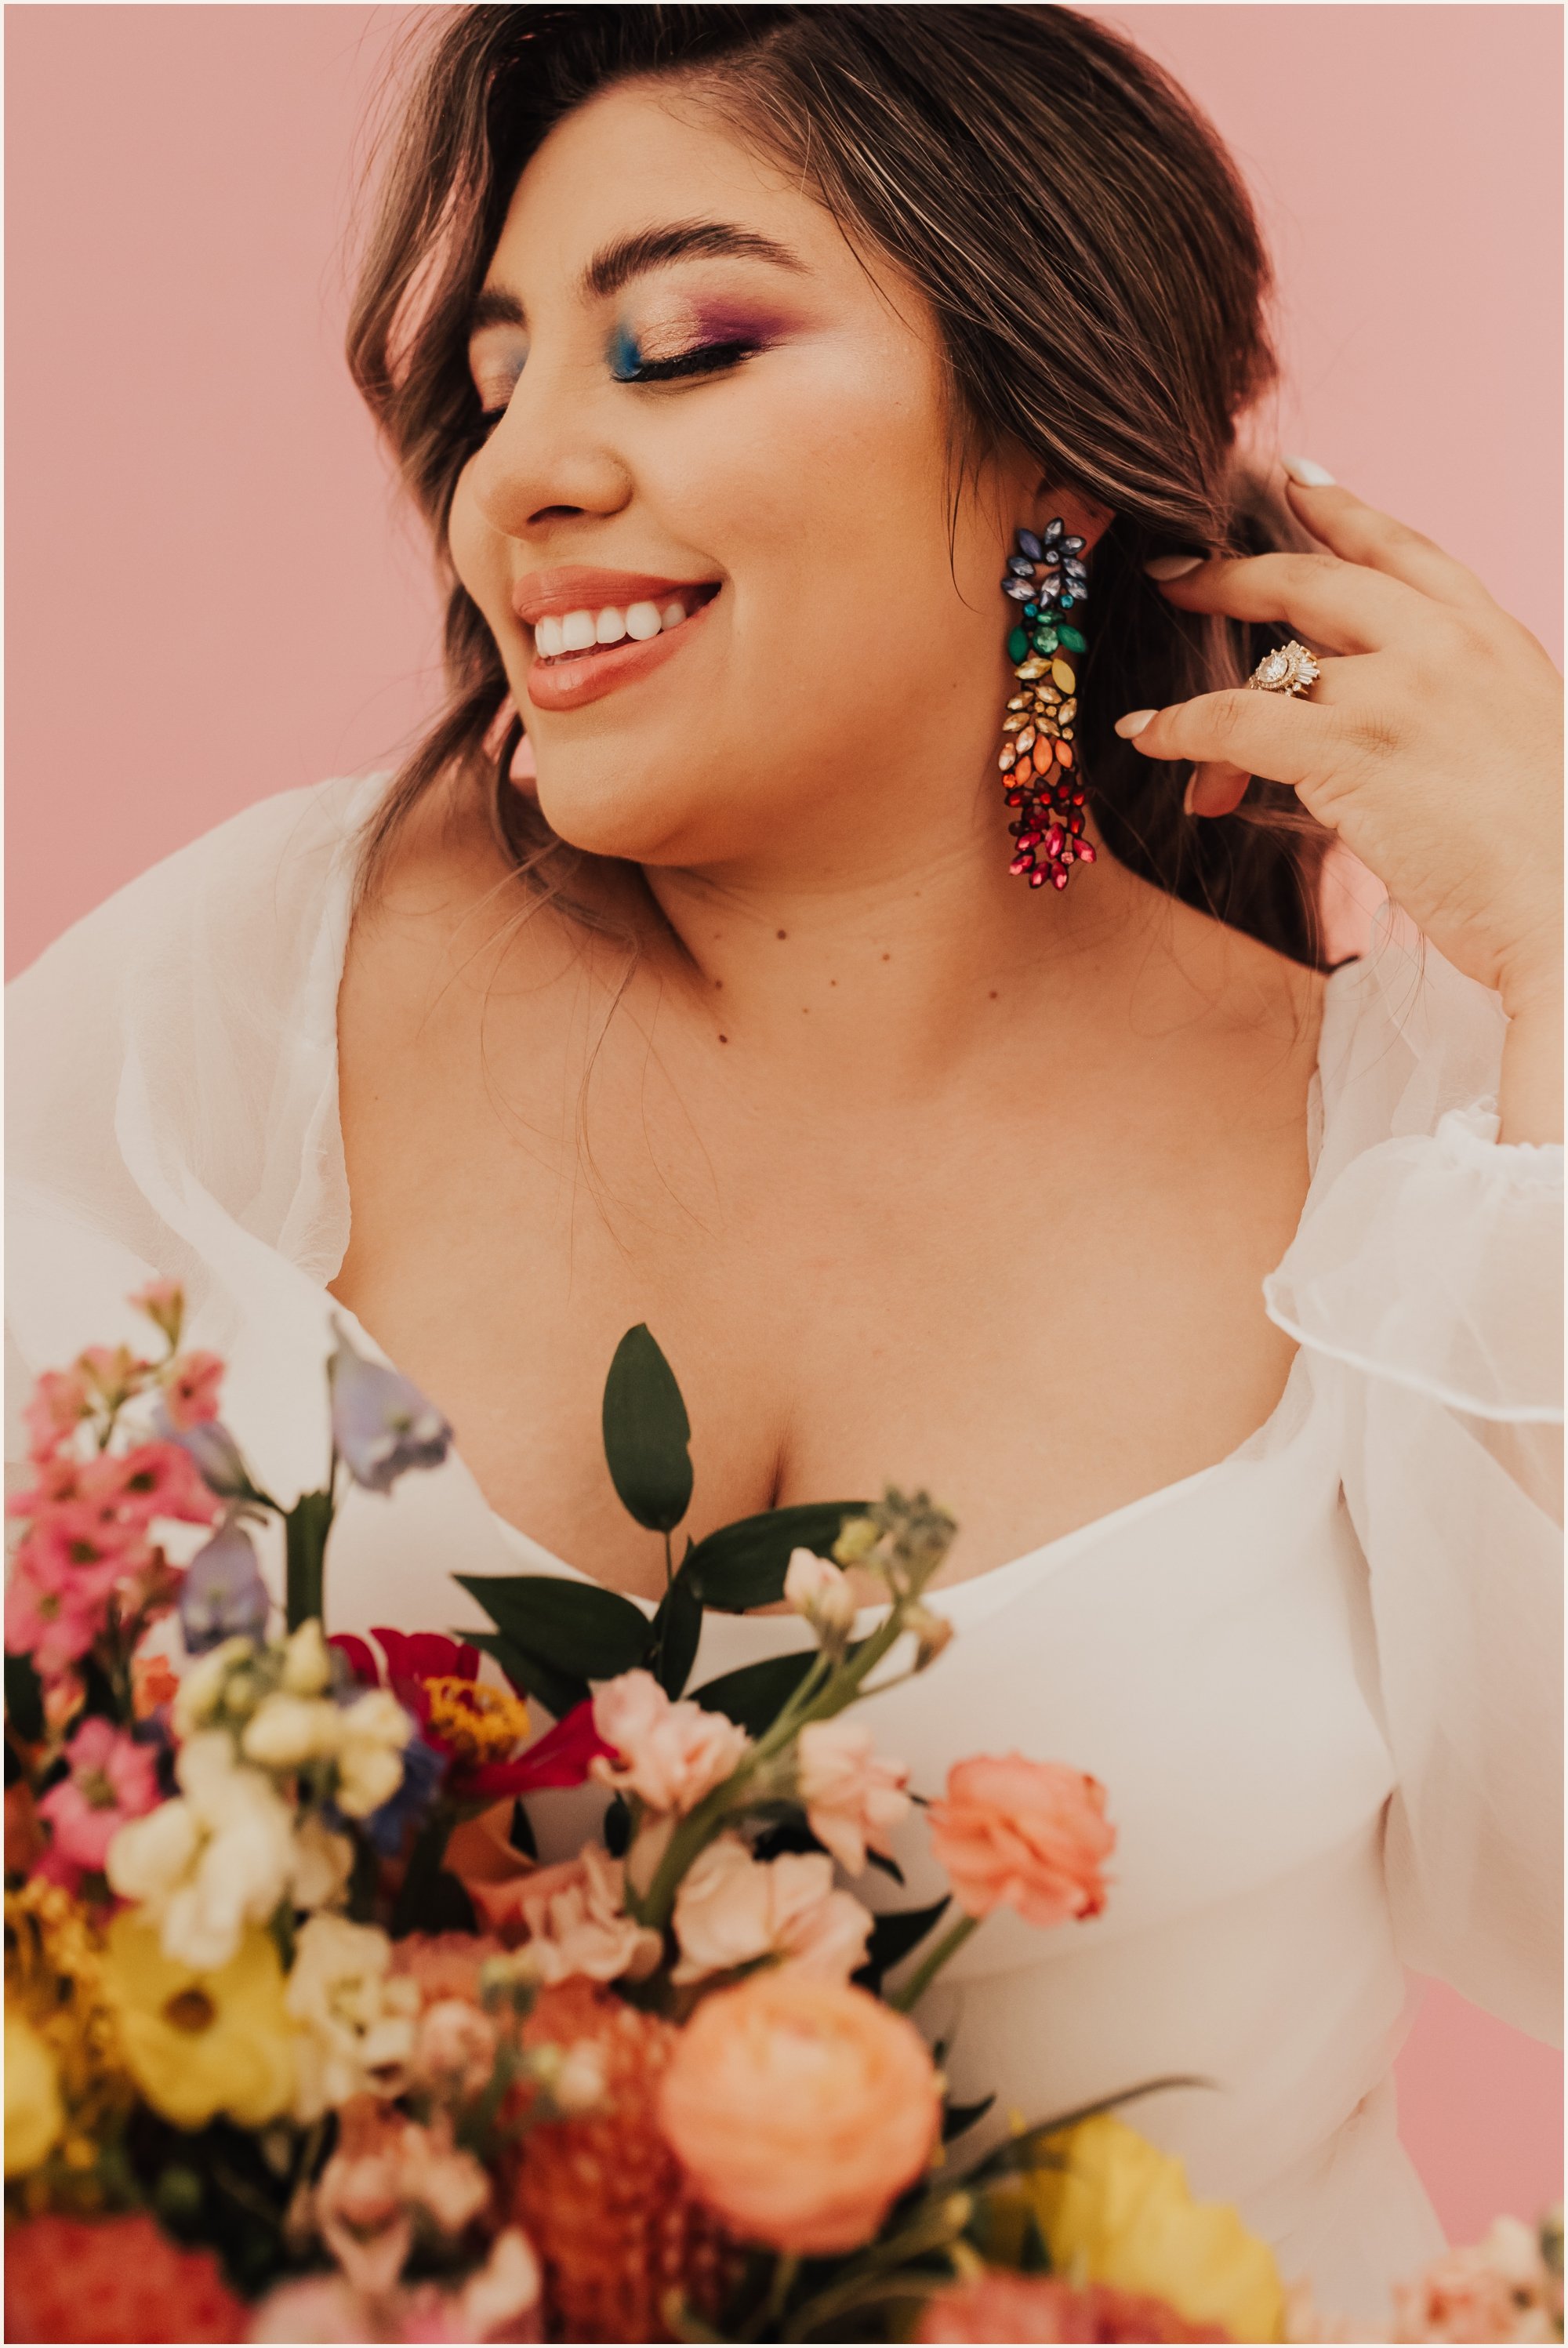 Pink and Yellow Wedding Inspiration | Lauren Parr Photography | Austin Based Wedding Photographer